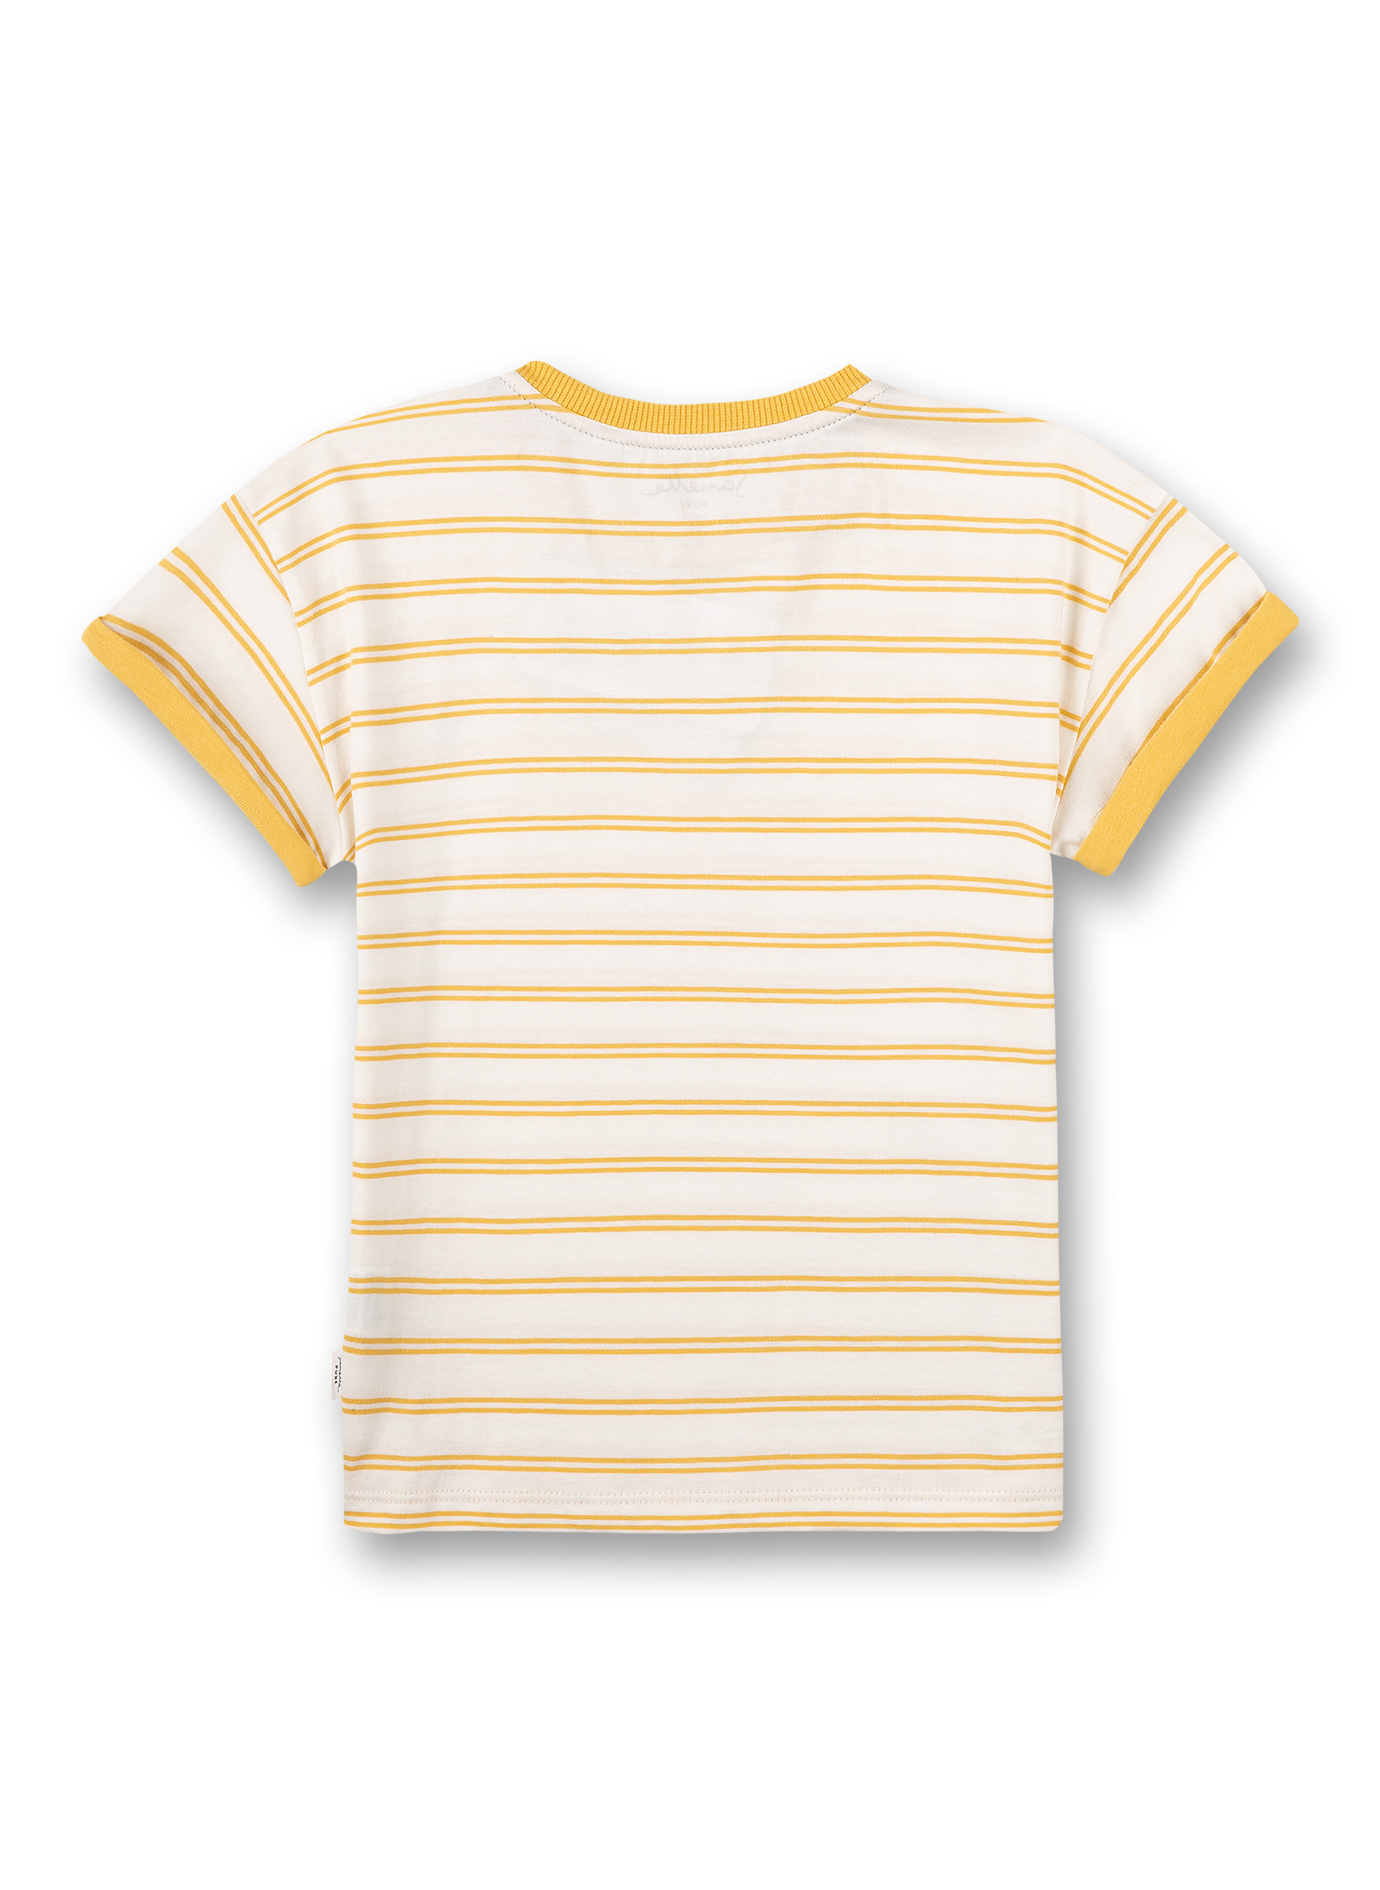 Unisex T-Shirt Gelb Ringel